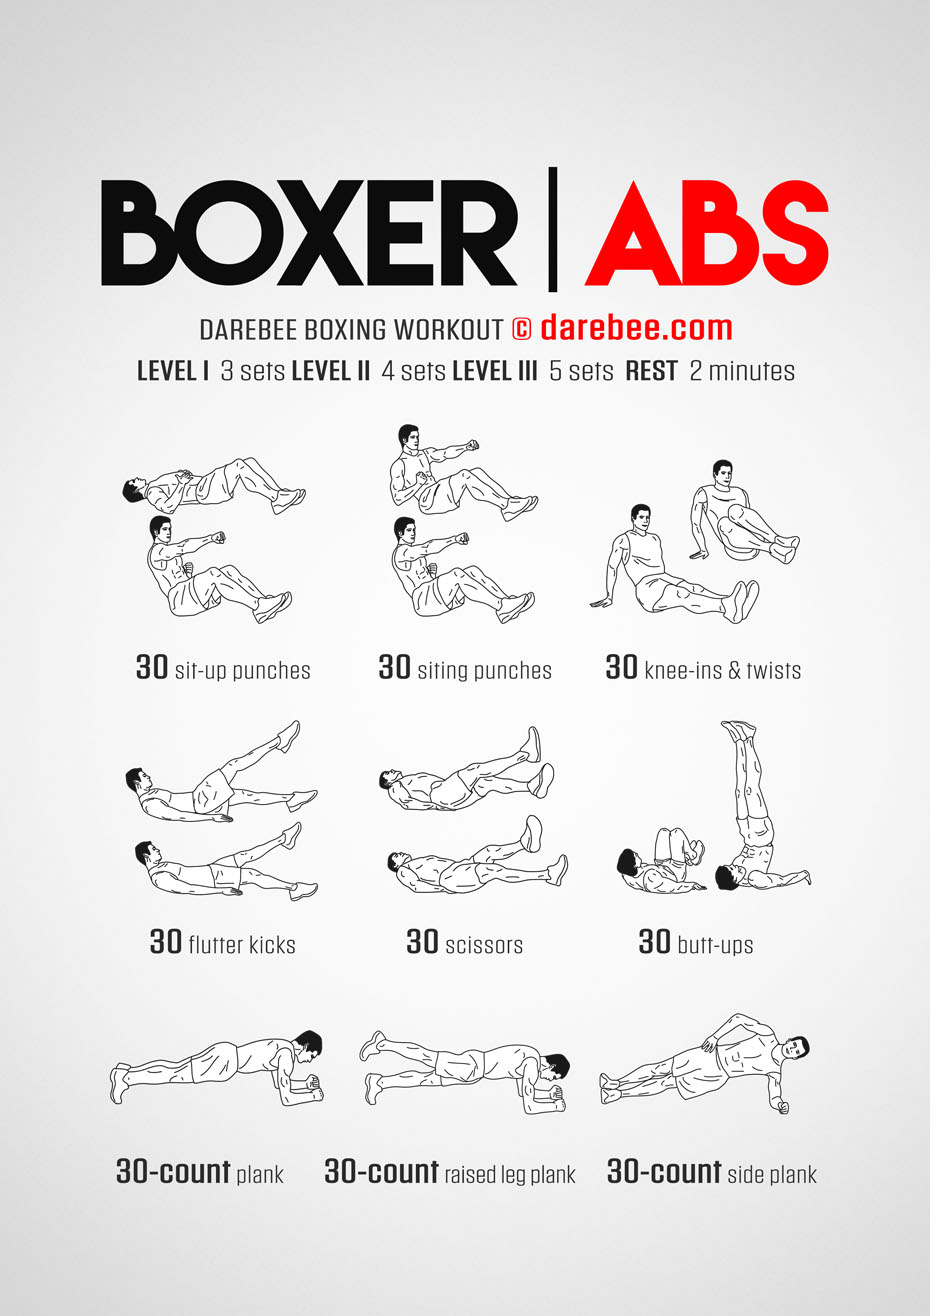 Boxing exercises